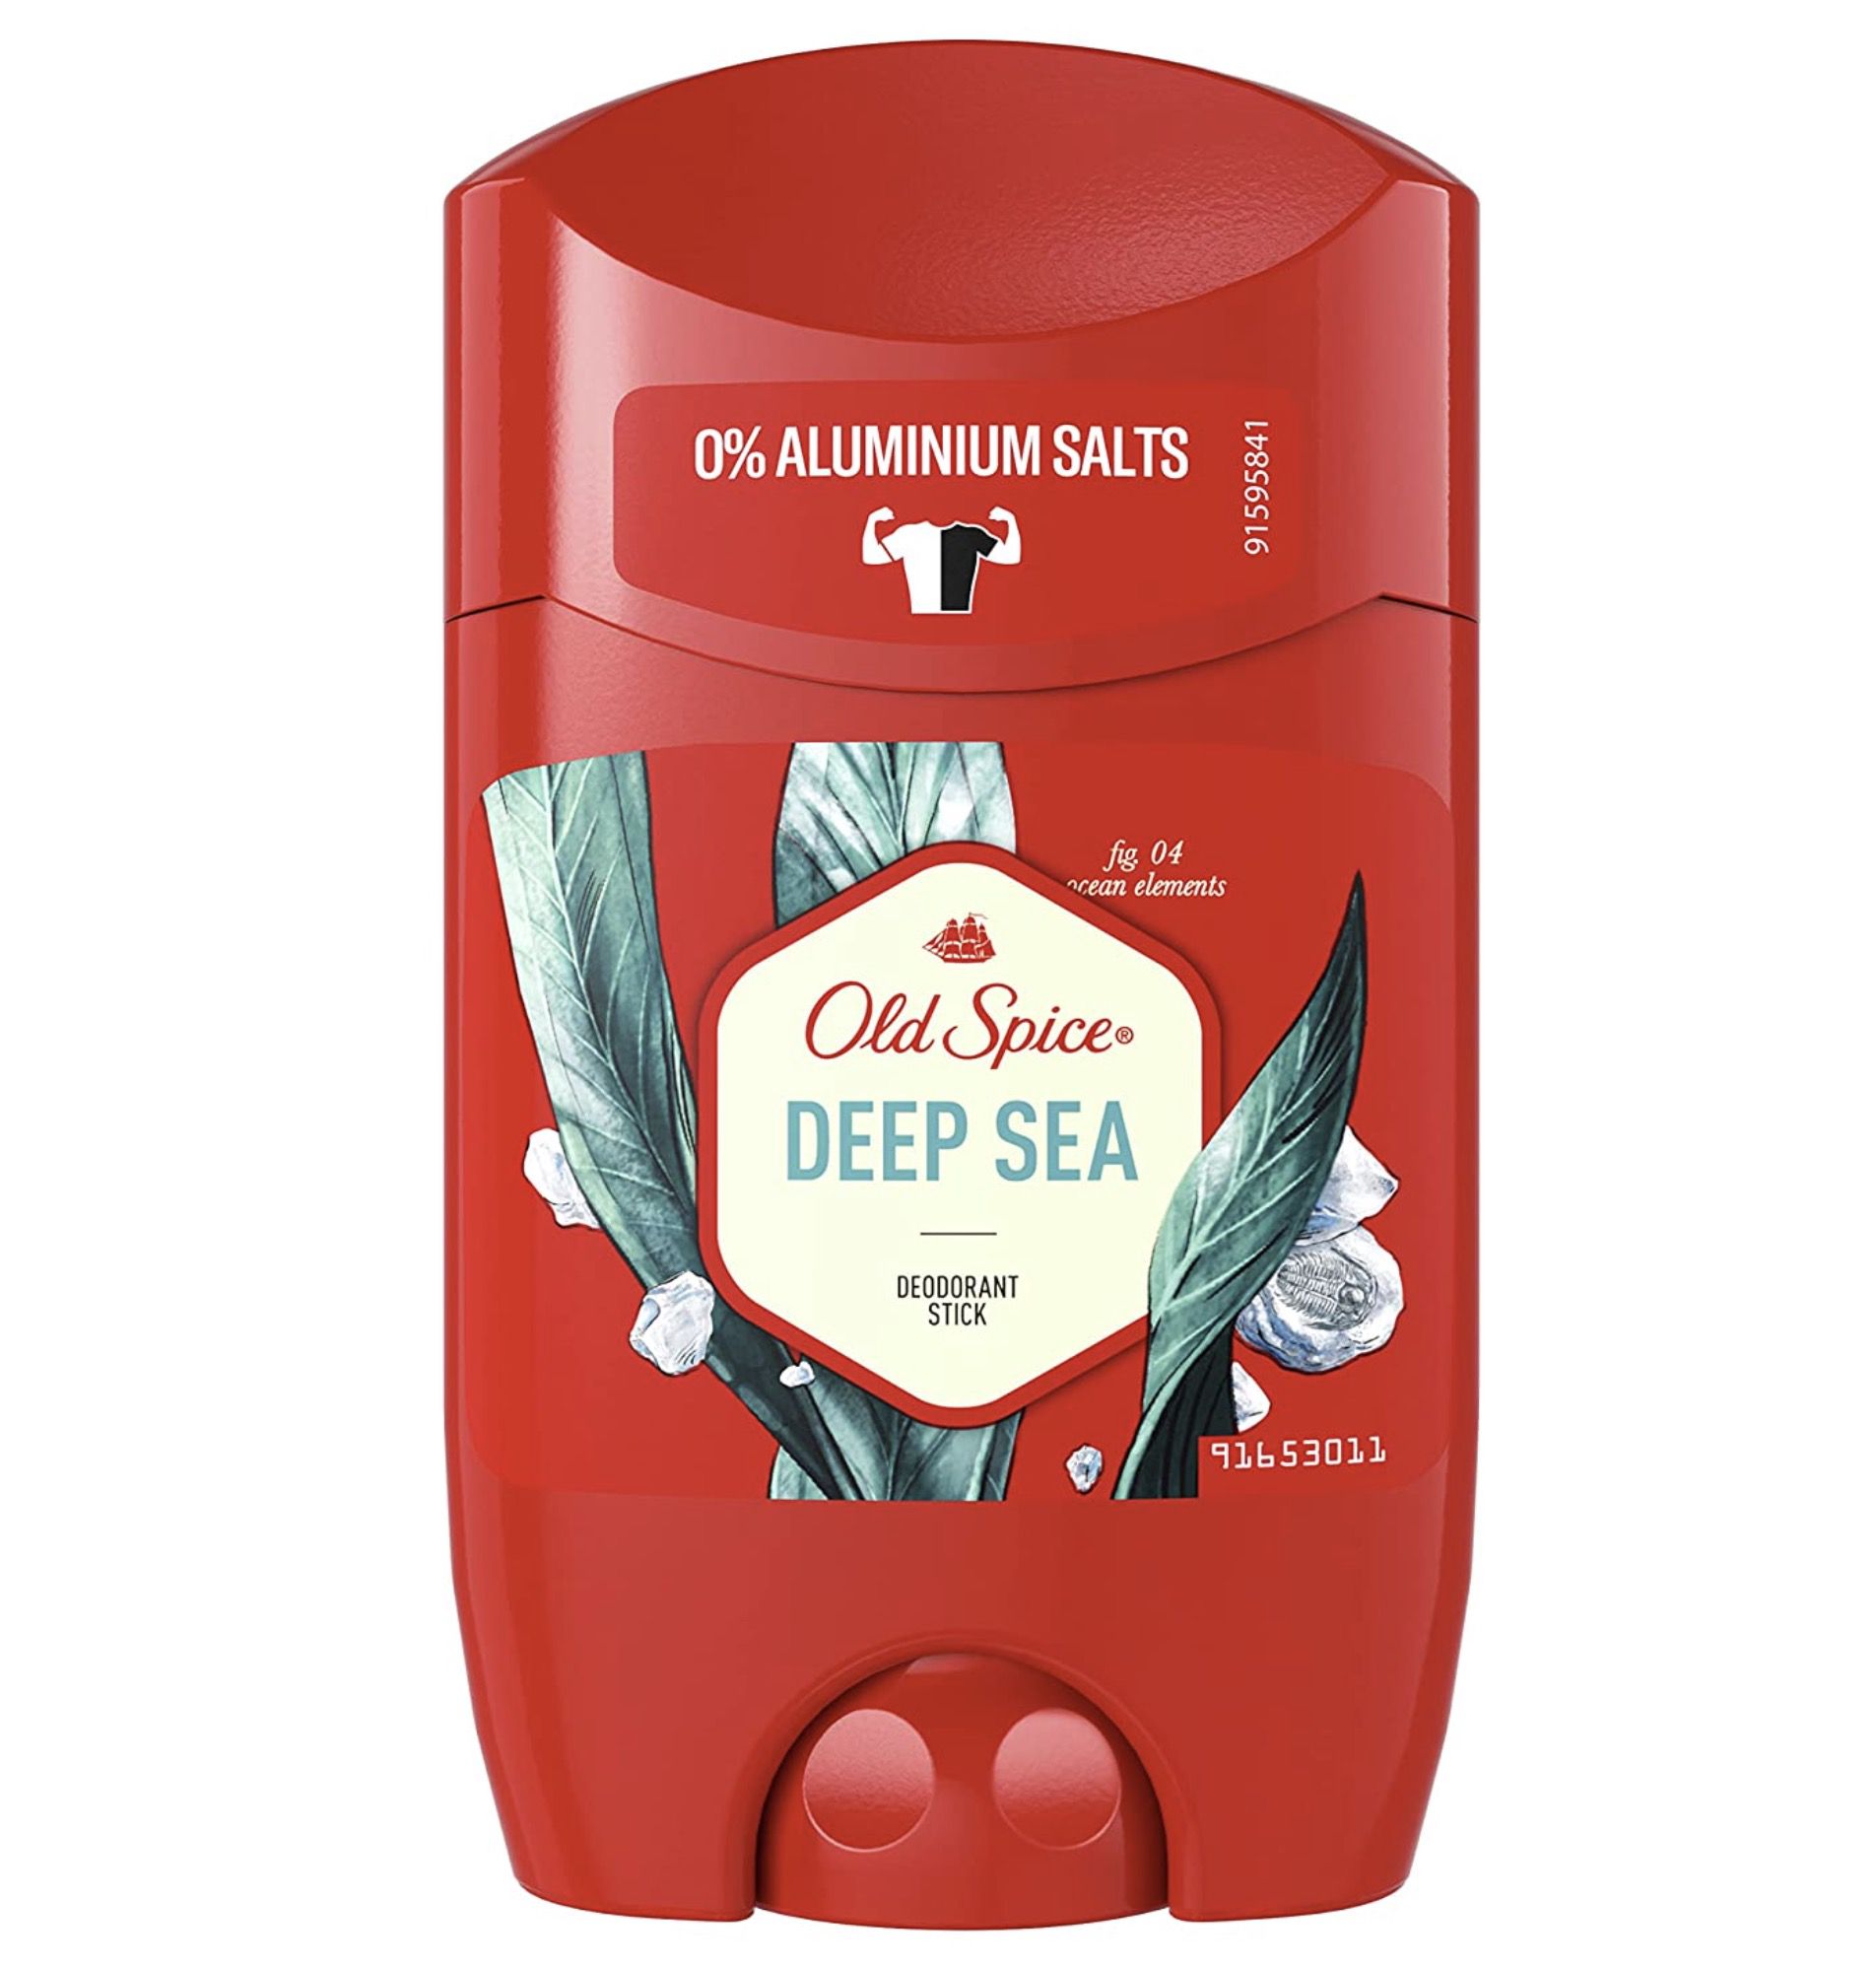 Old Spice Deep Sea Deodorant Stick für 1,59€   Prime Sparabo